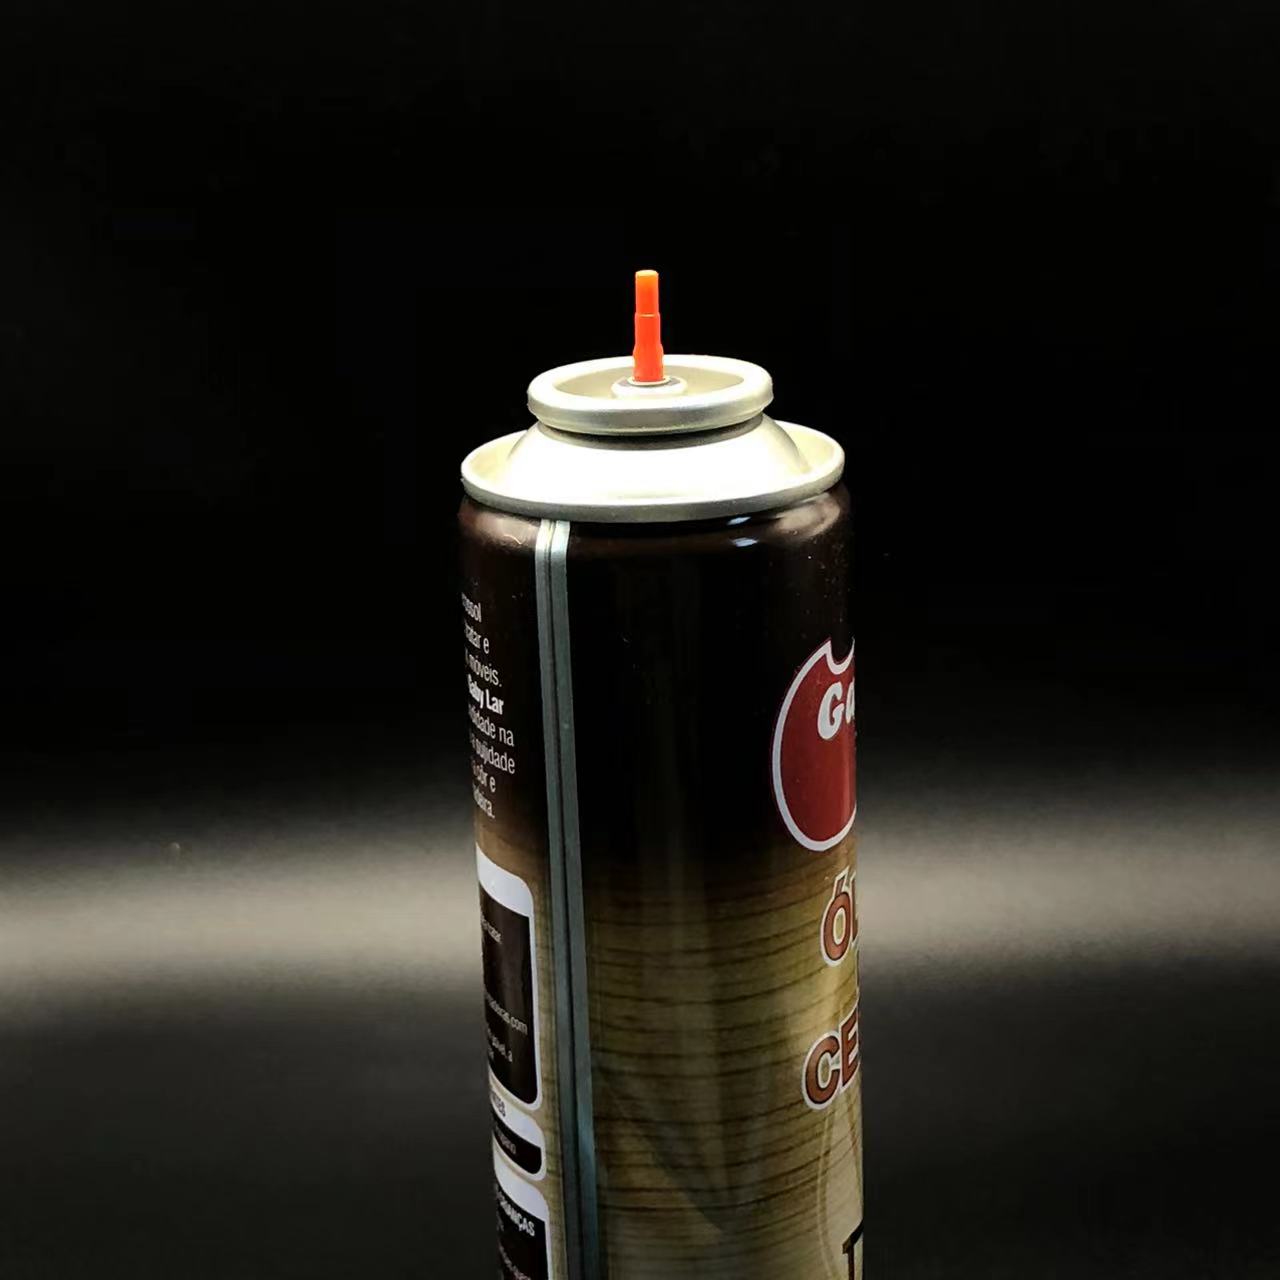 Universal Butane Gas Lighter Refill Valve Compatible with Various Lighter Models